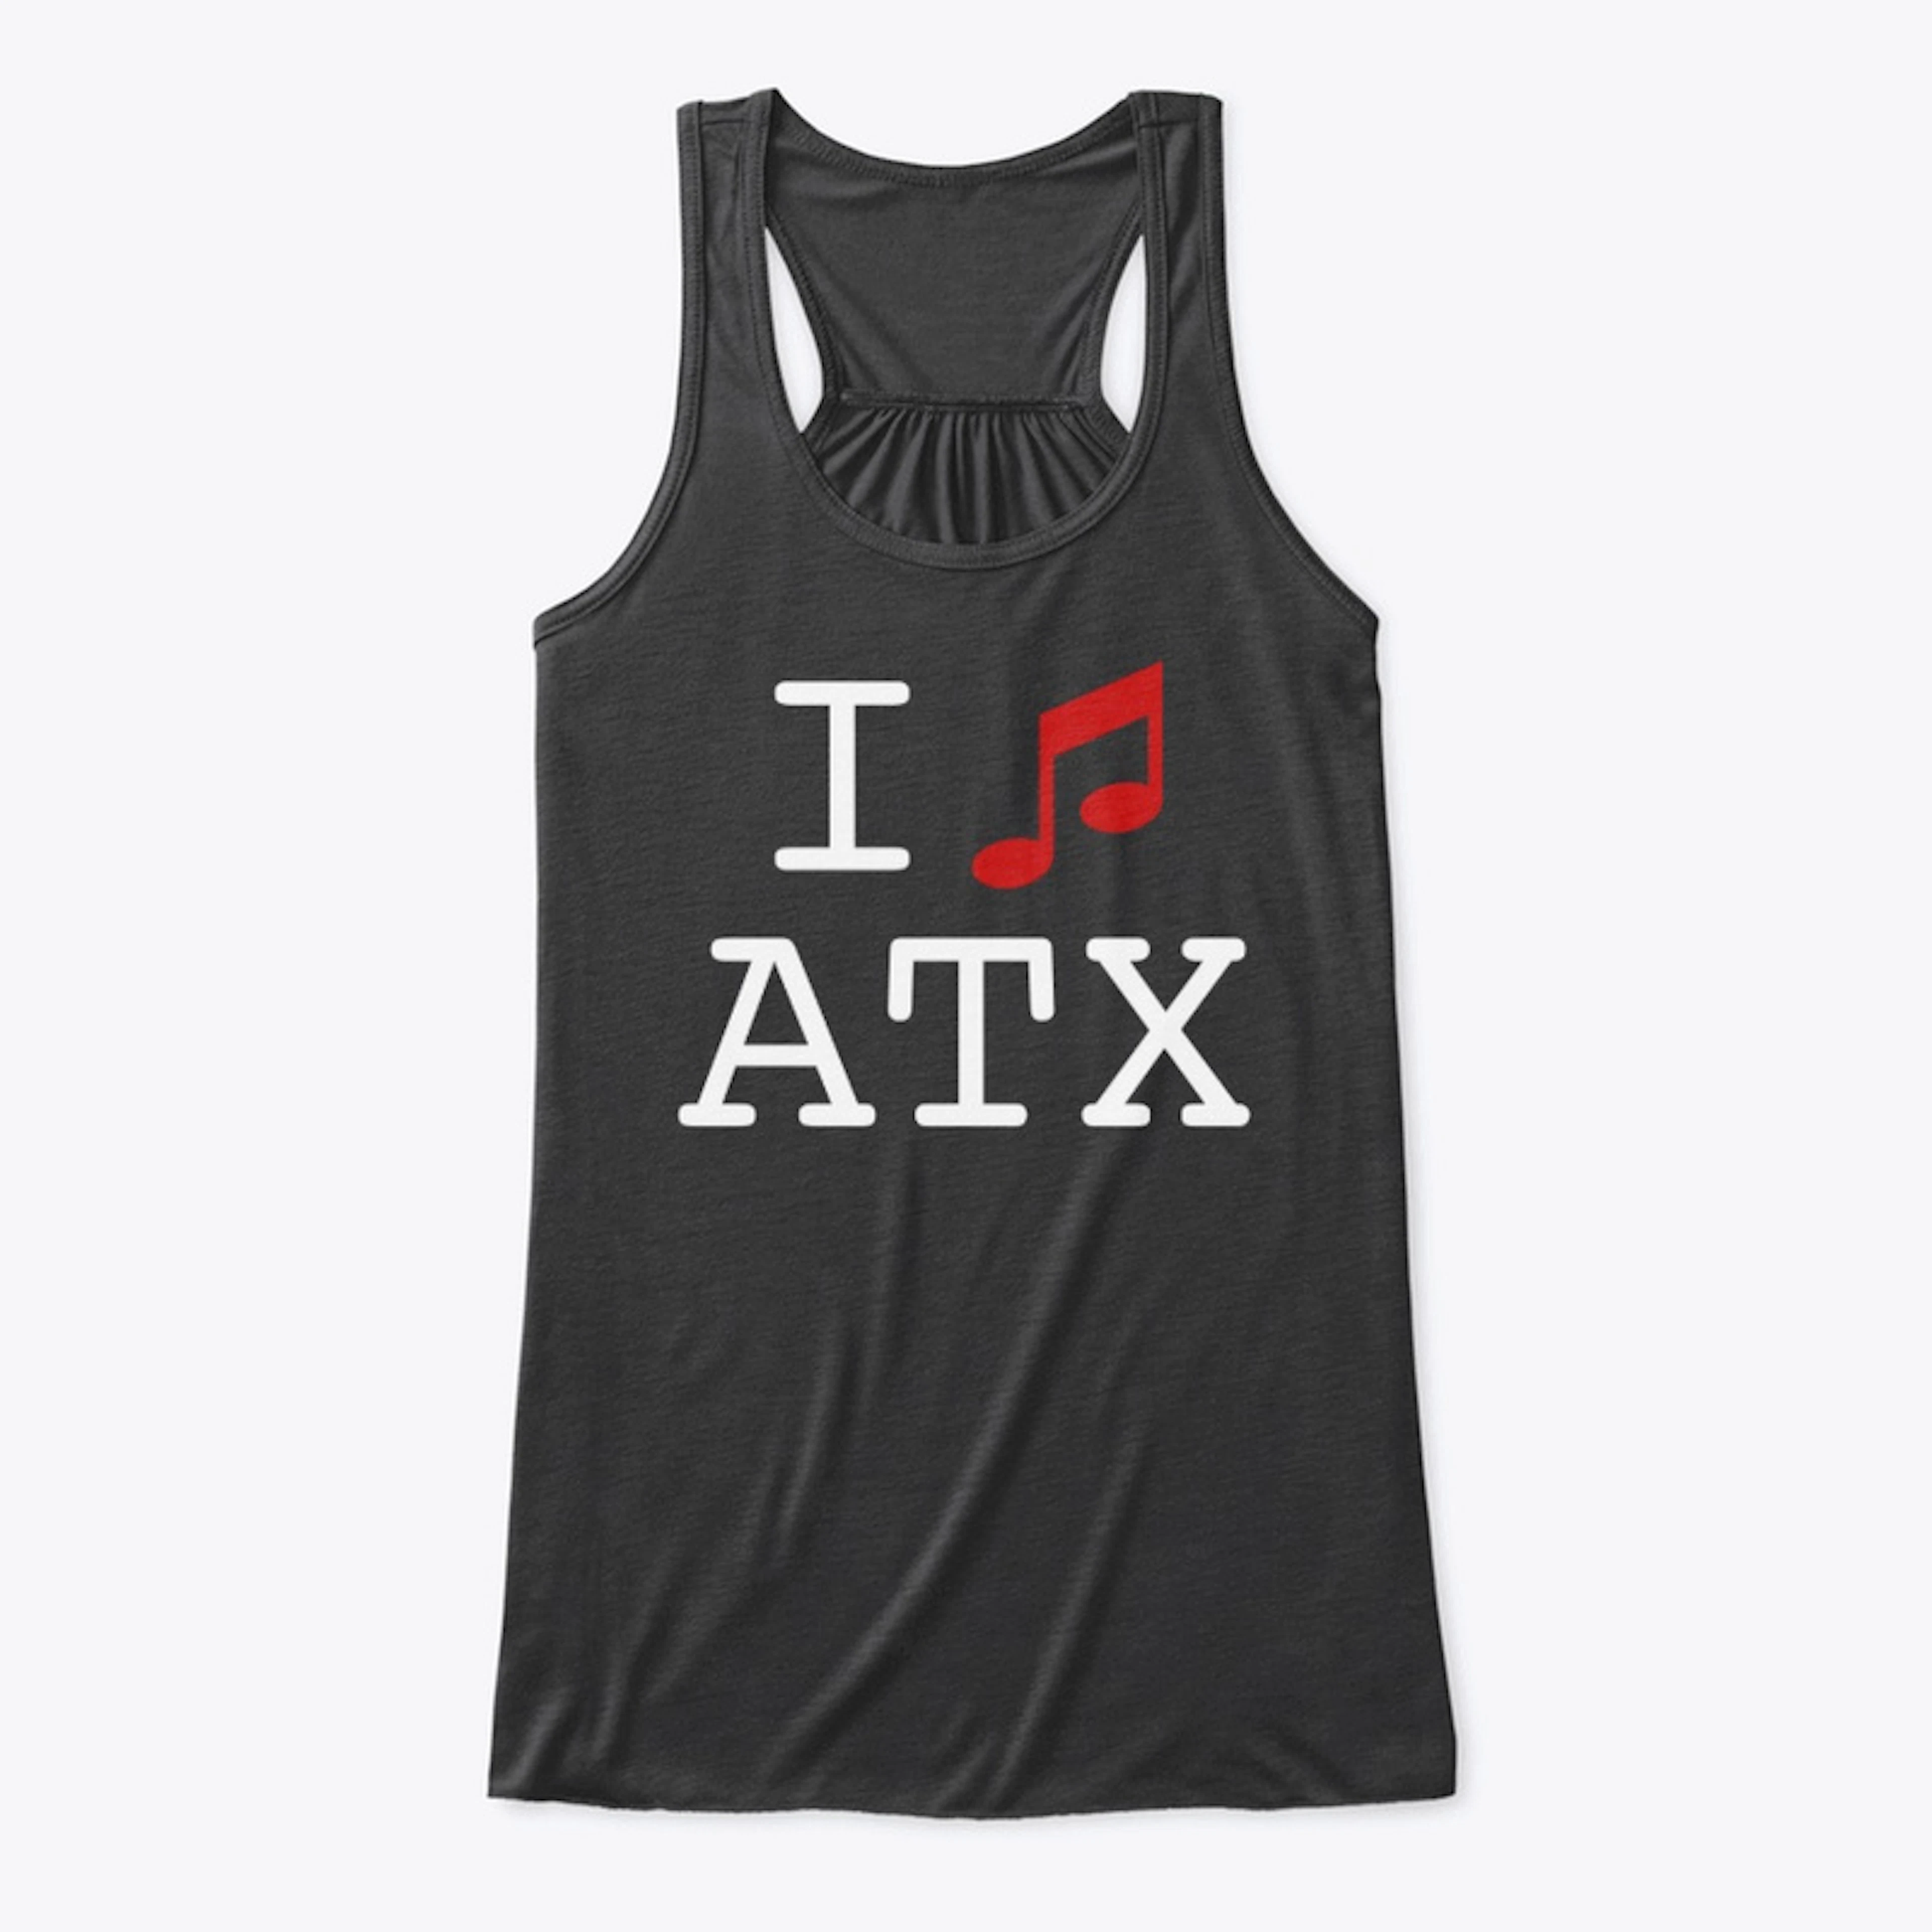 I (love) ATX - white lettering